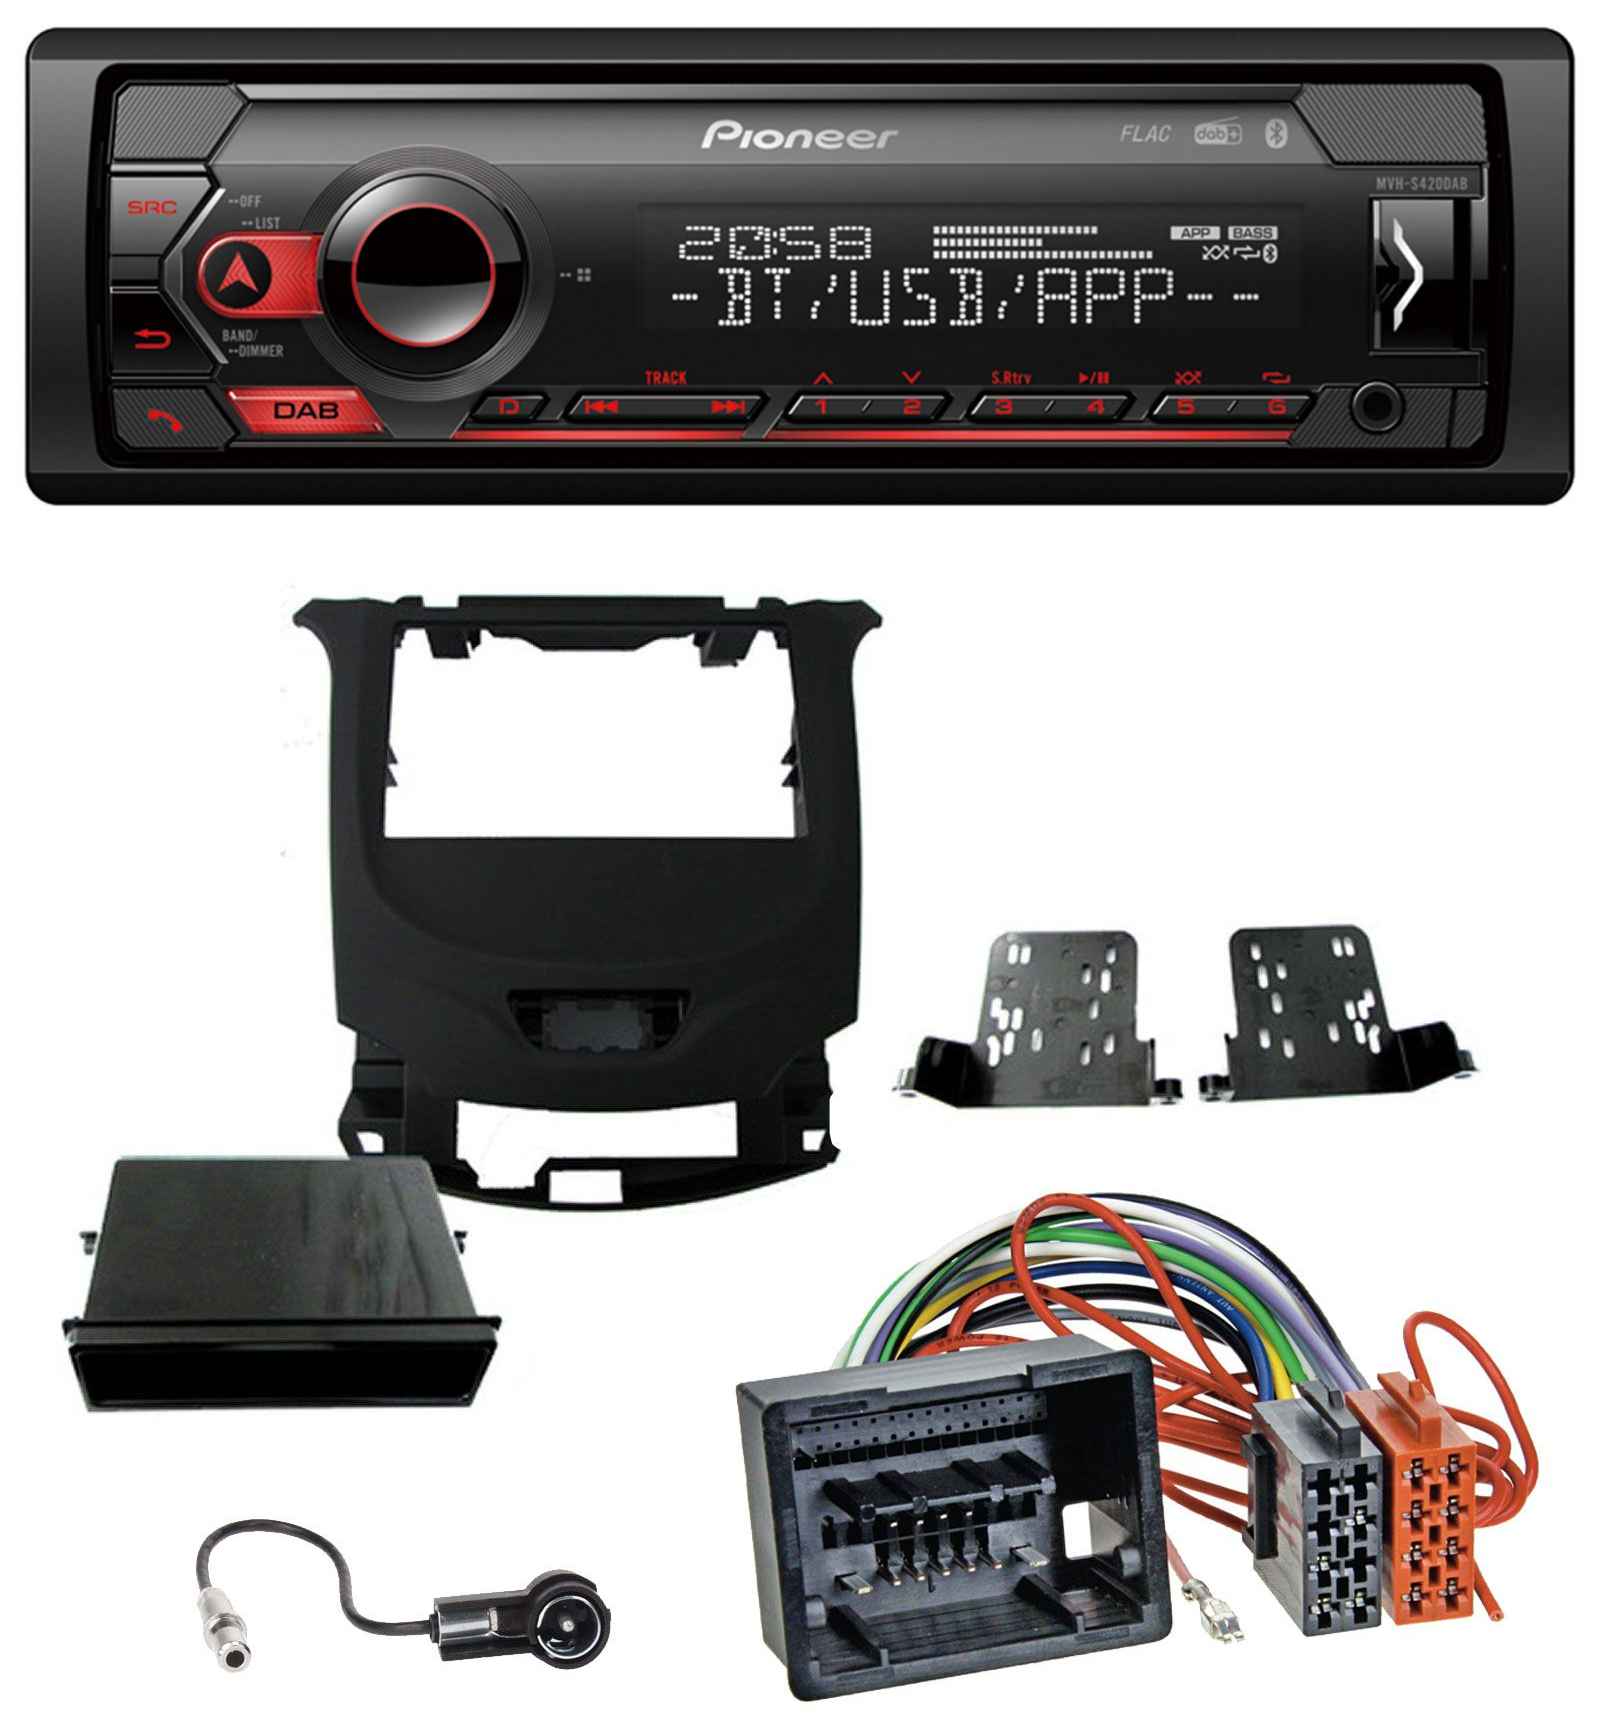 Pioneer MP3 USB DAB Bluetooth Car Radio for Chevrolet